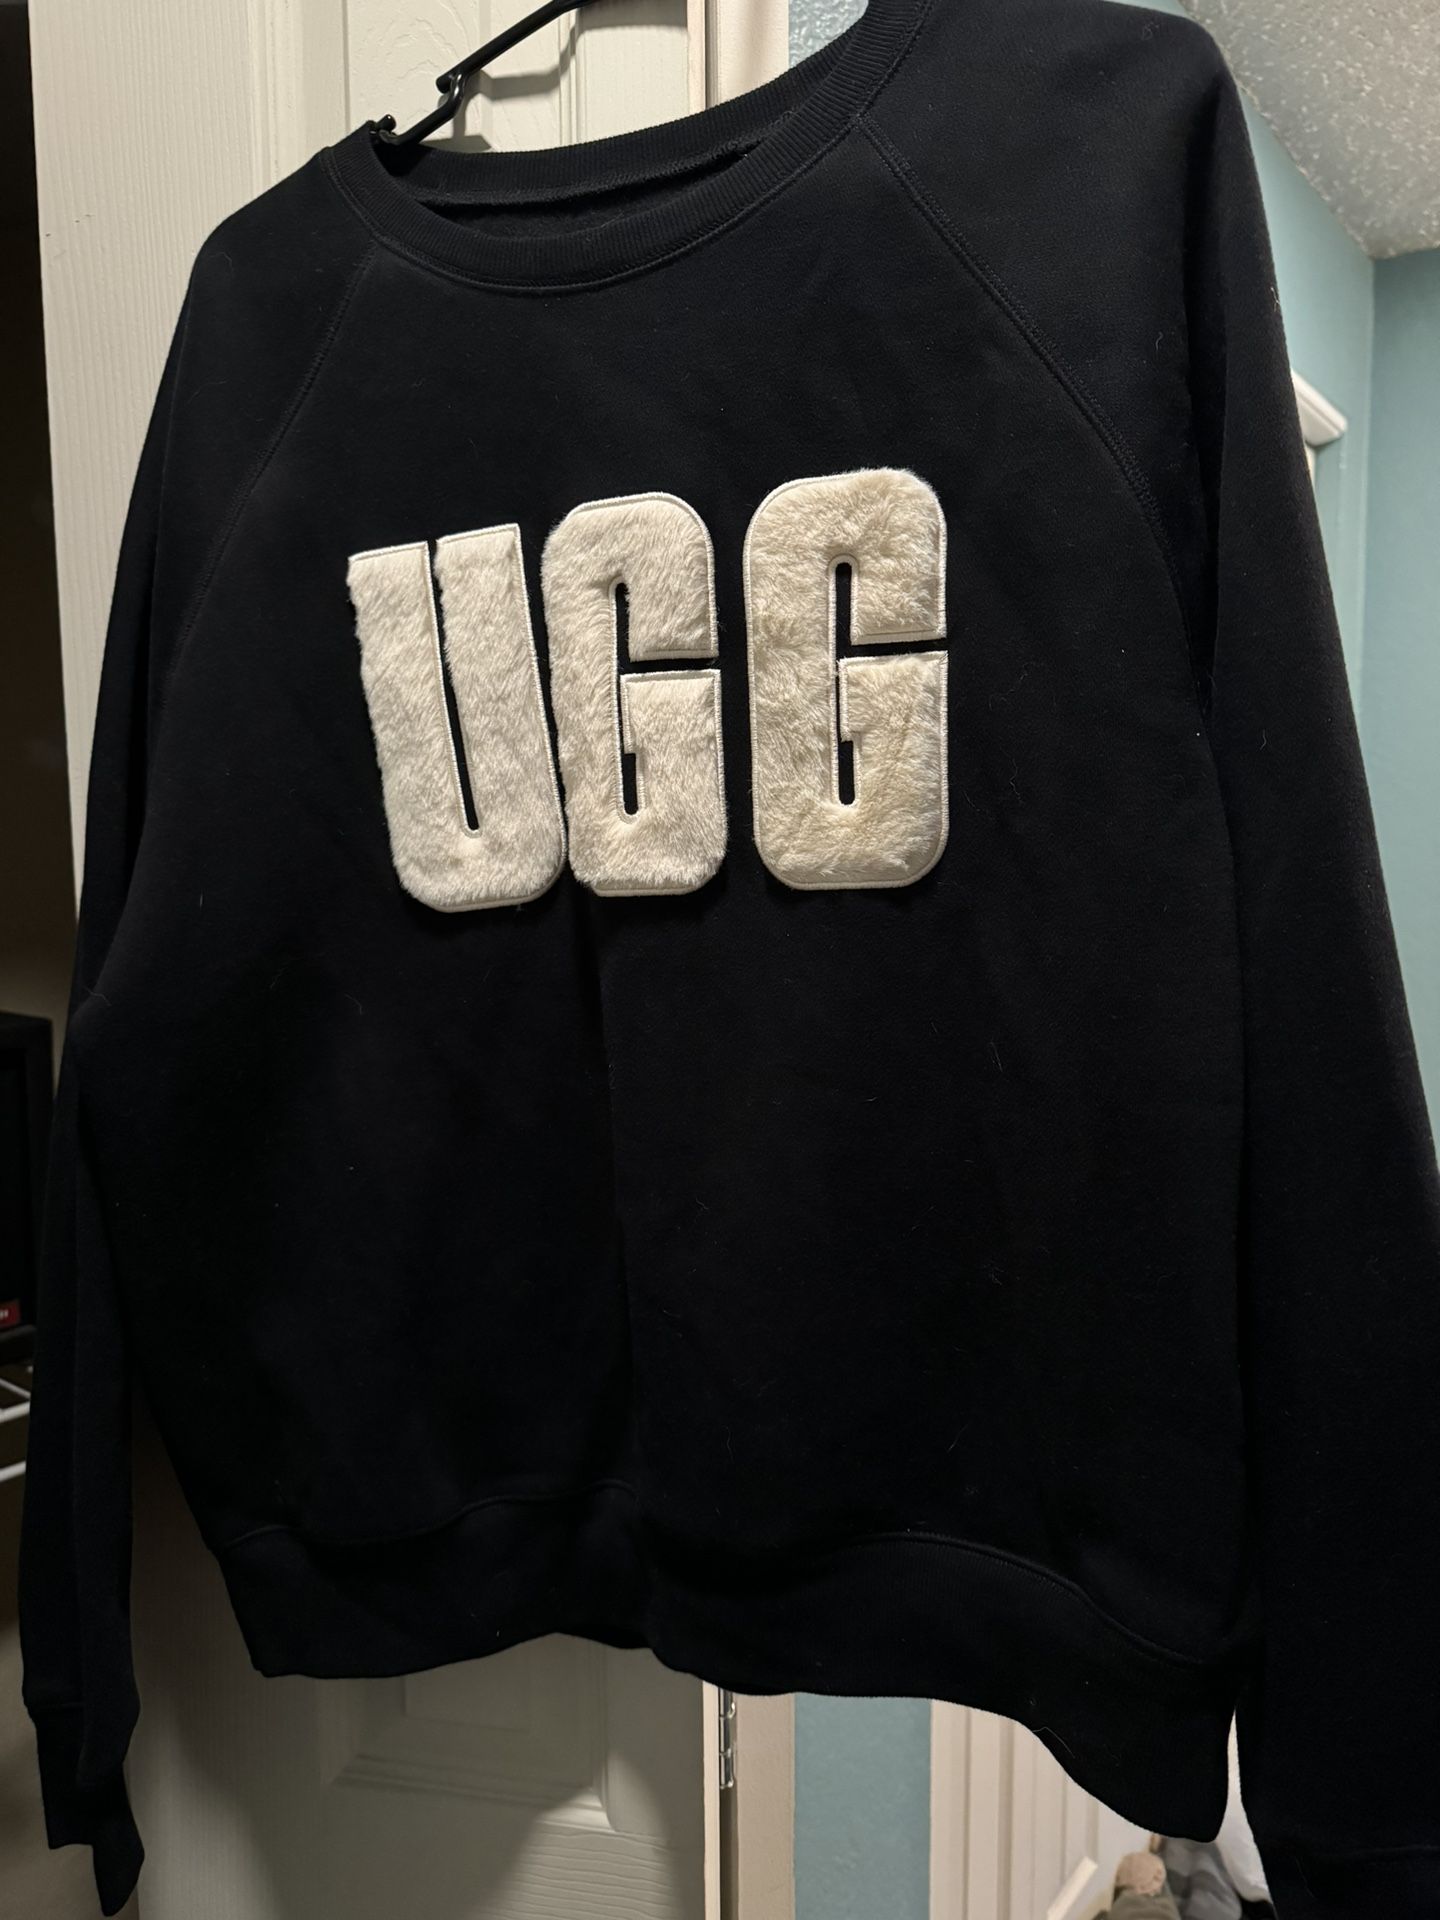 Women’s Size Large Black Ugg Sweatshirt